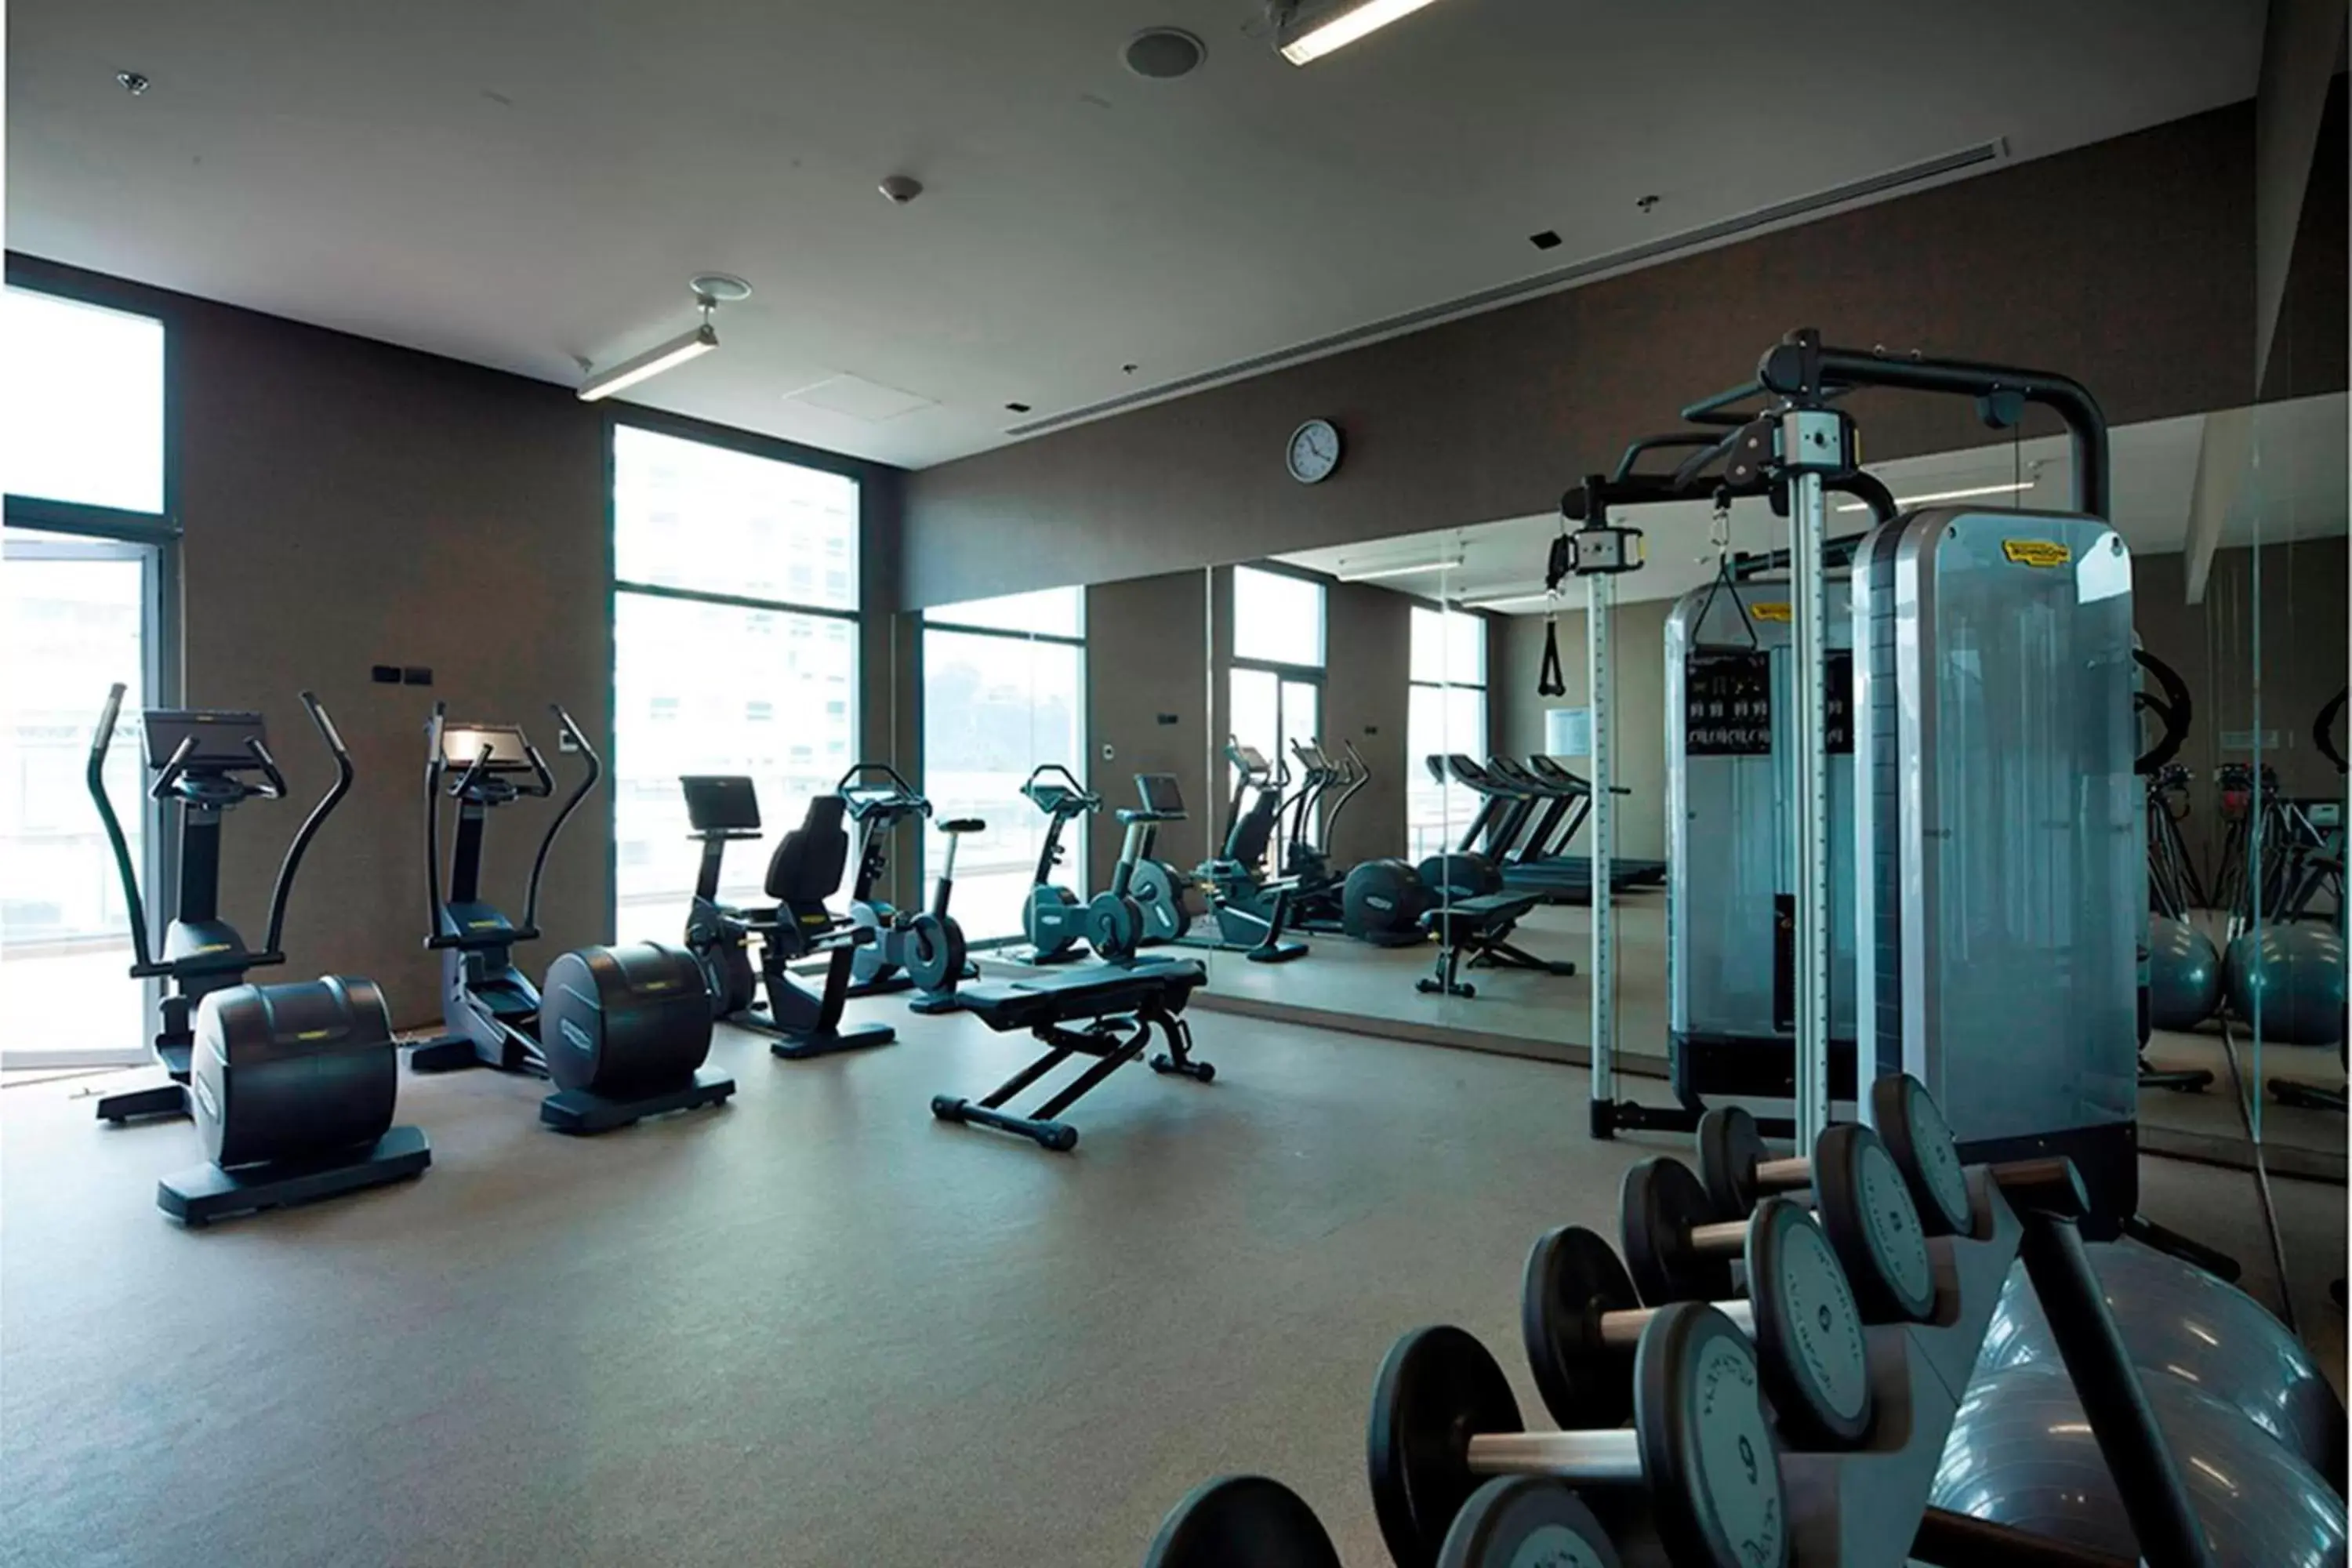 Fitness centre/facilities, Fitness Center/Facilities in AC Hotel by Marriott Santa Fe